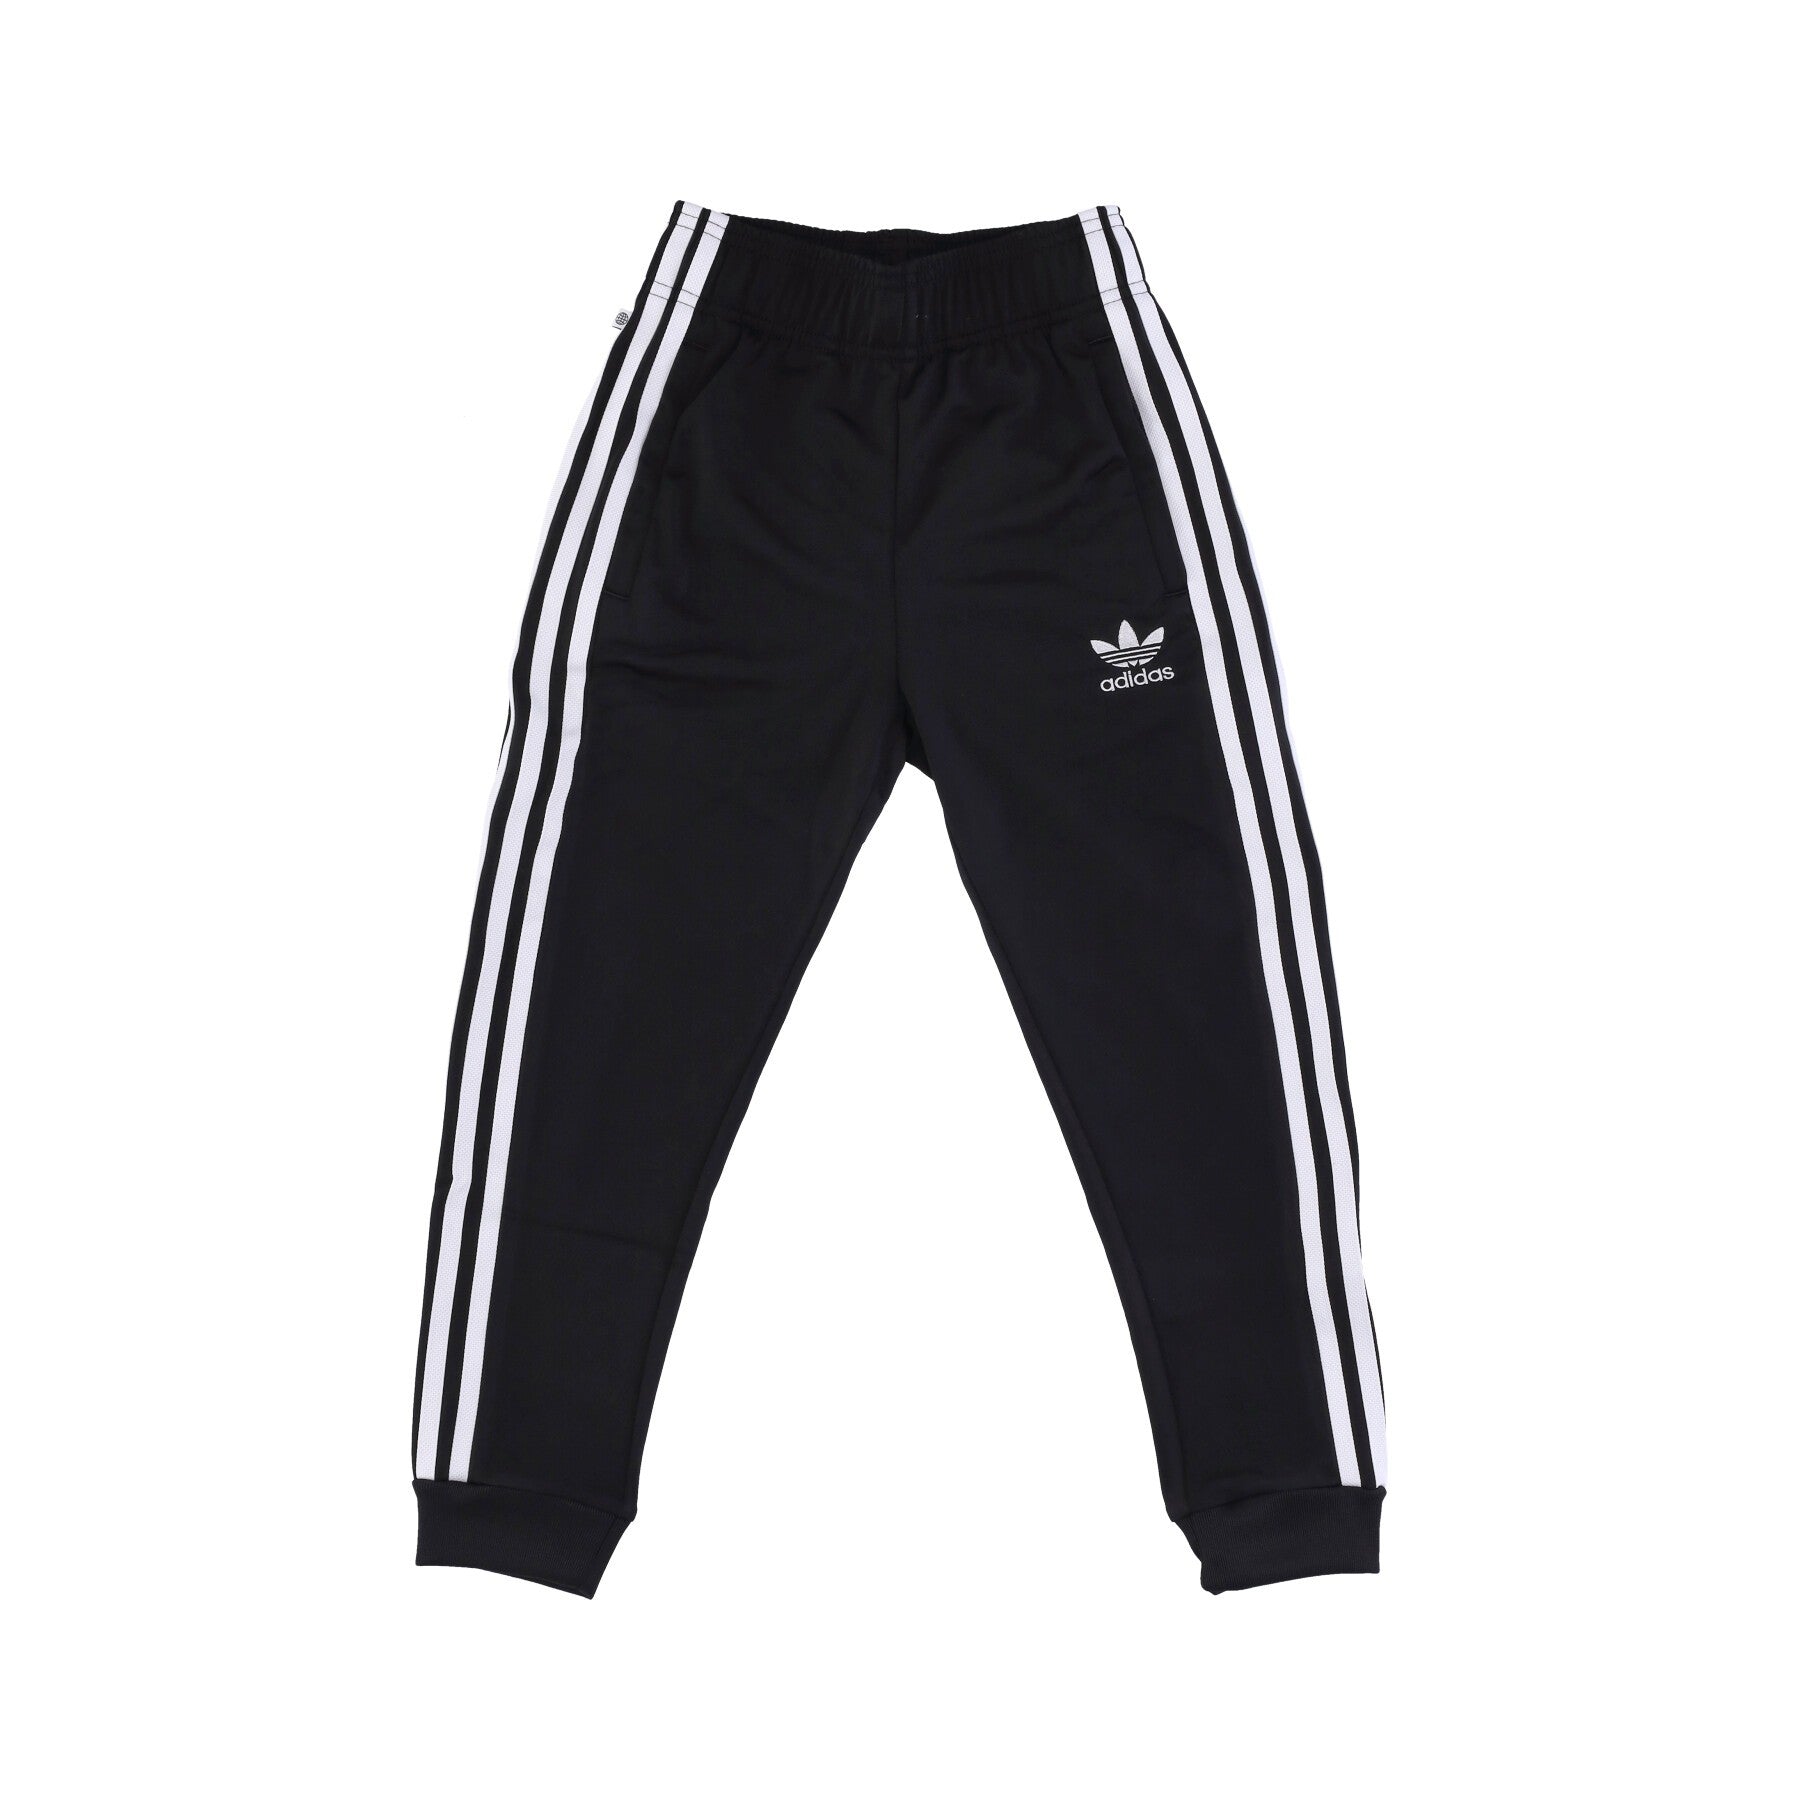 Adidas, Pantalone Tuta Ragazzo Track Pants, Black/white